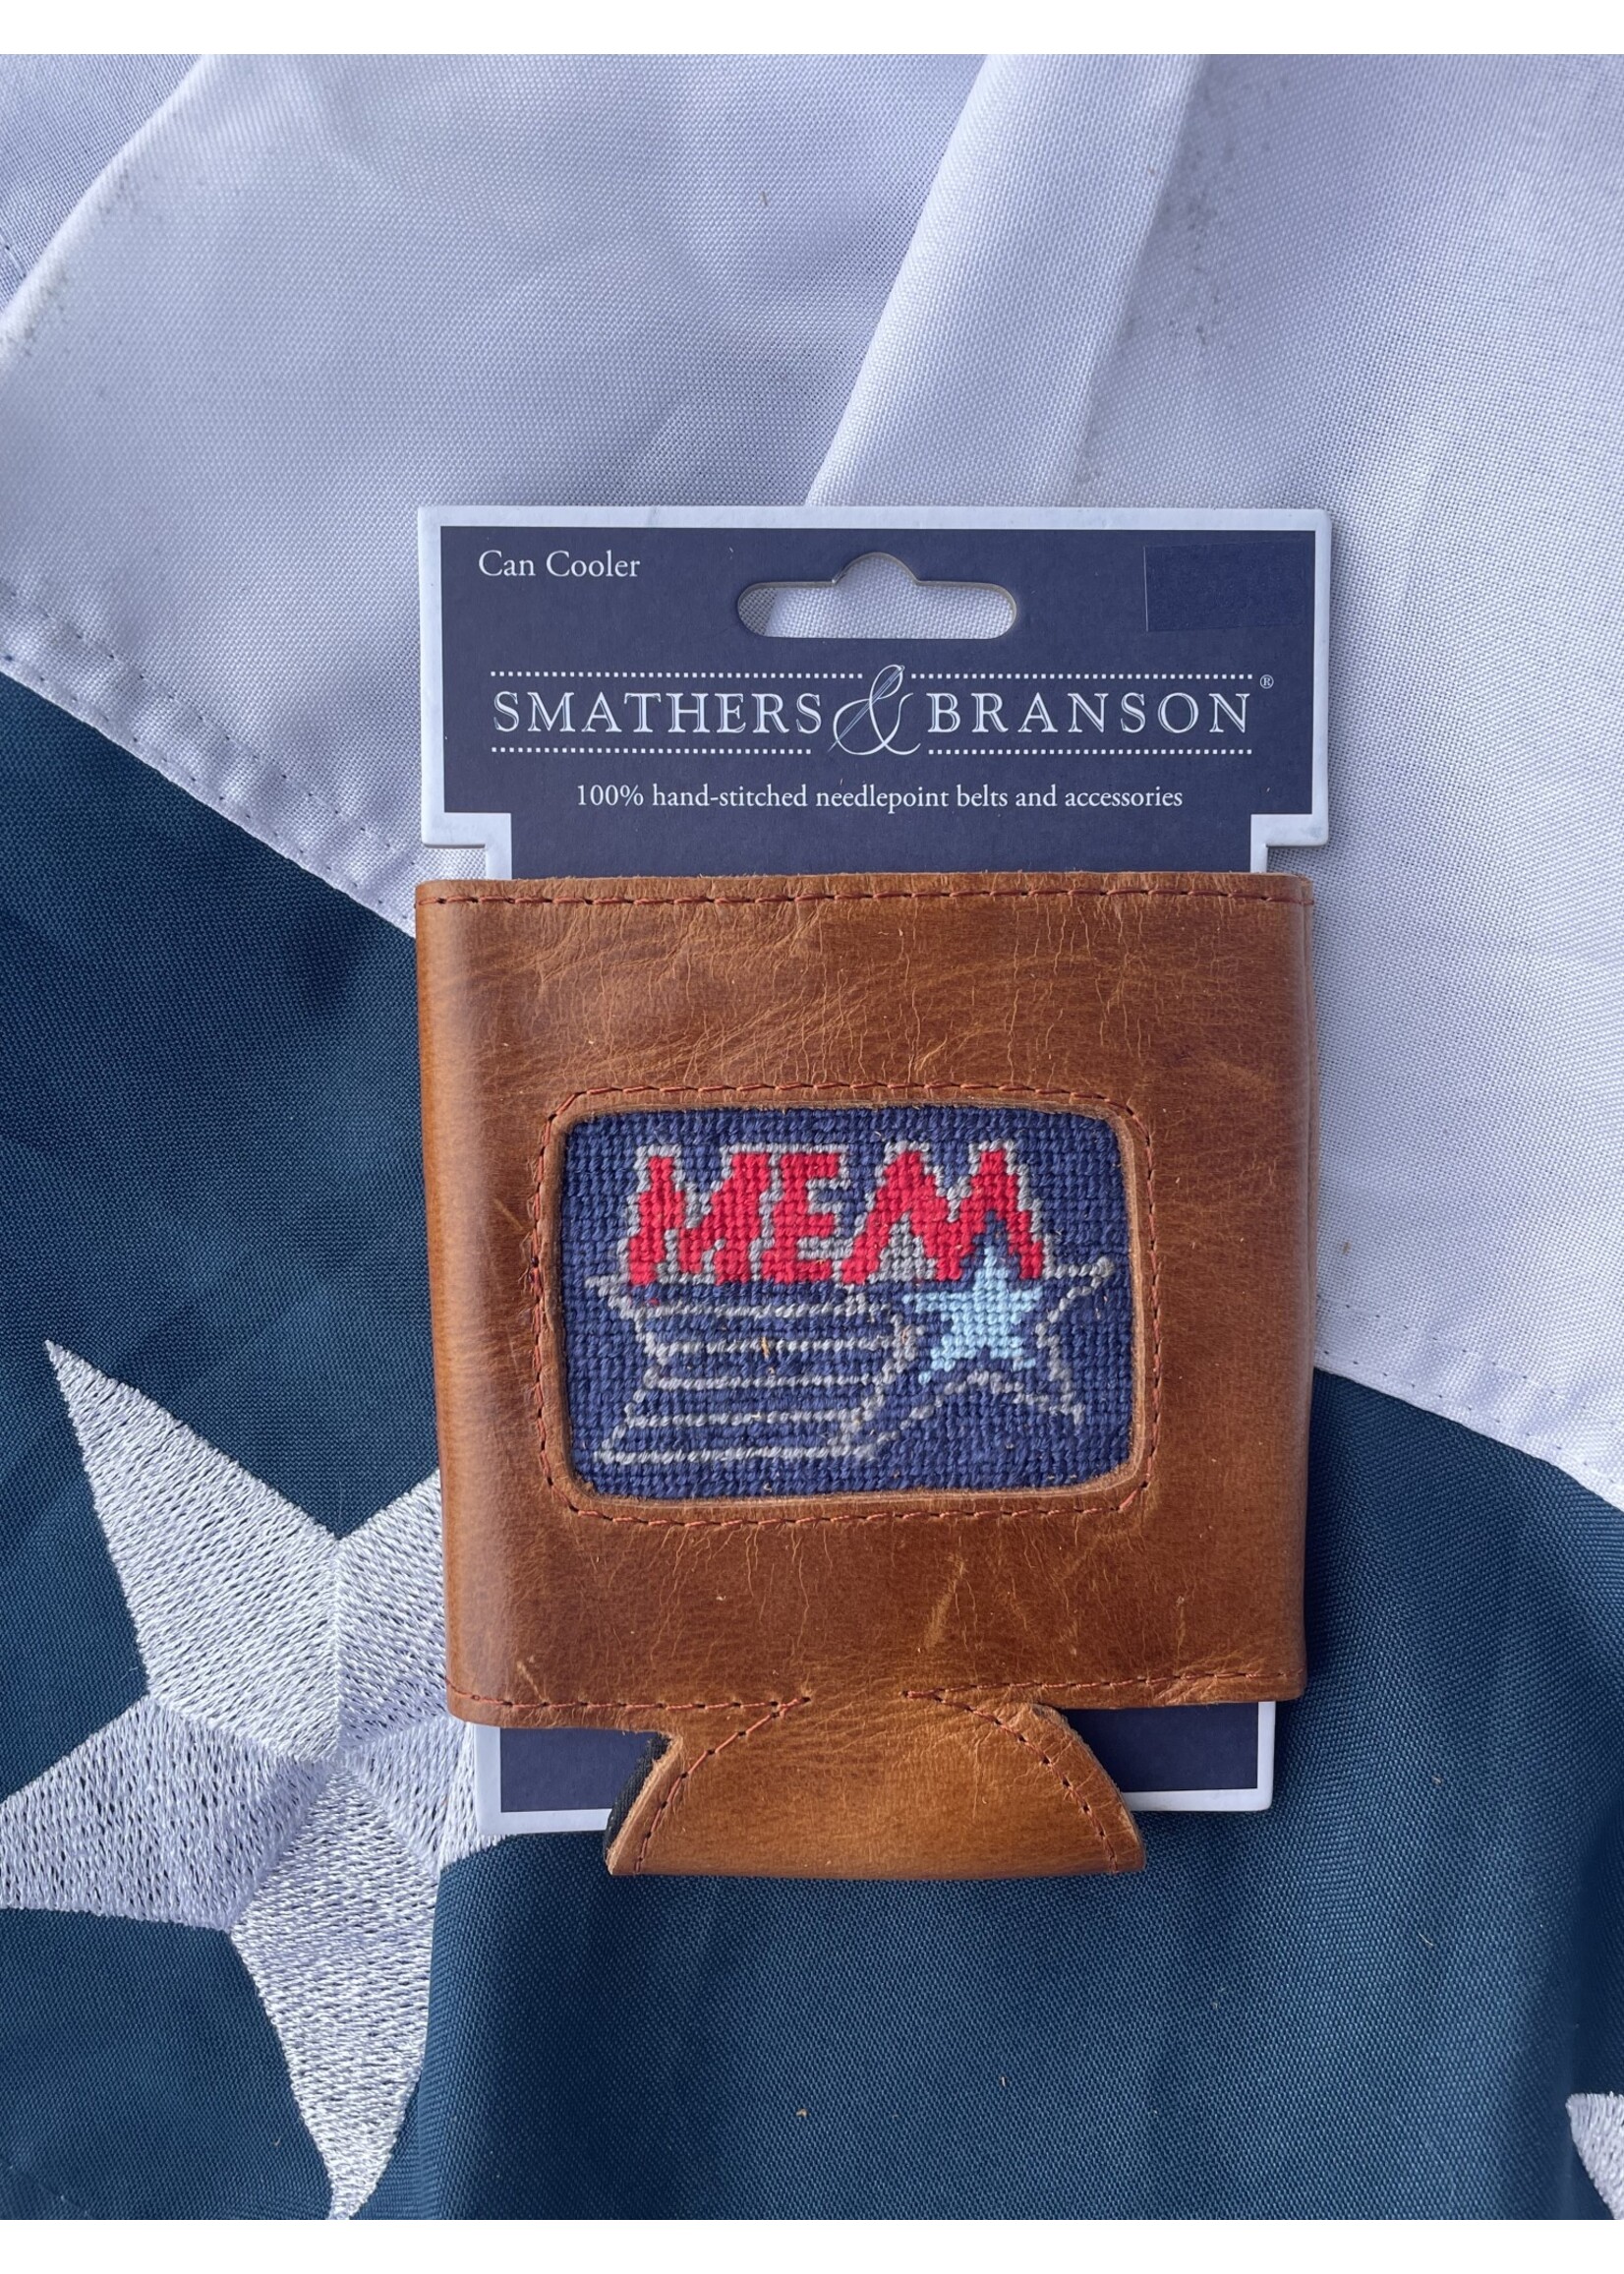 Smathers & Branson MEM Star Needlepoint Can Cooler